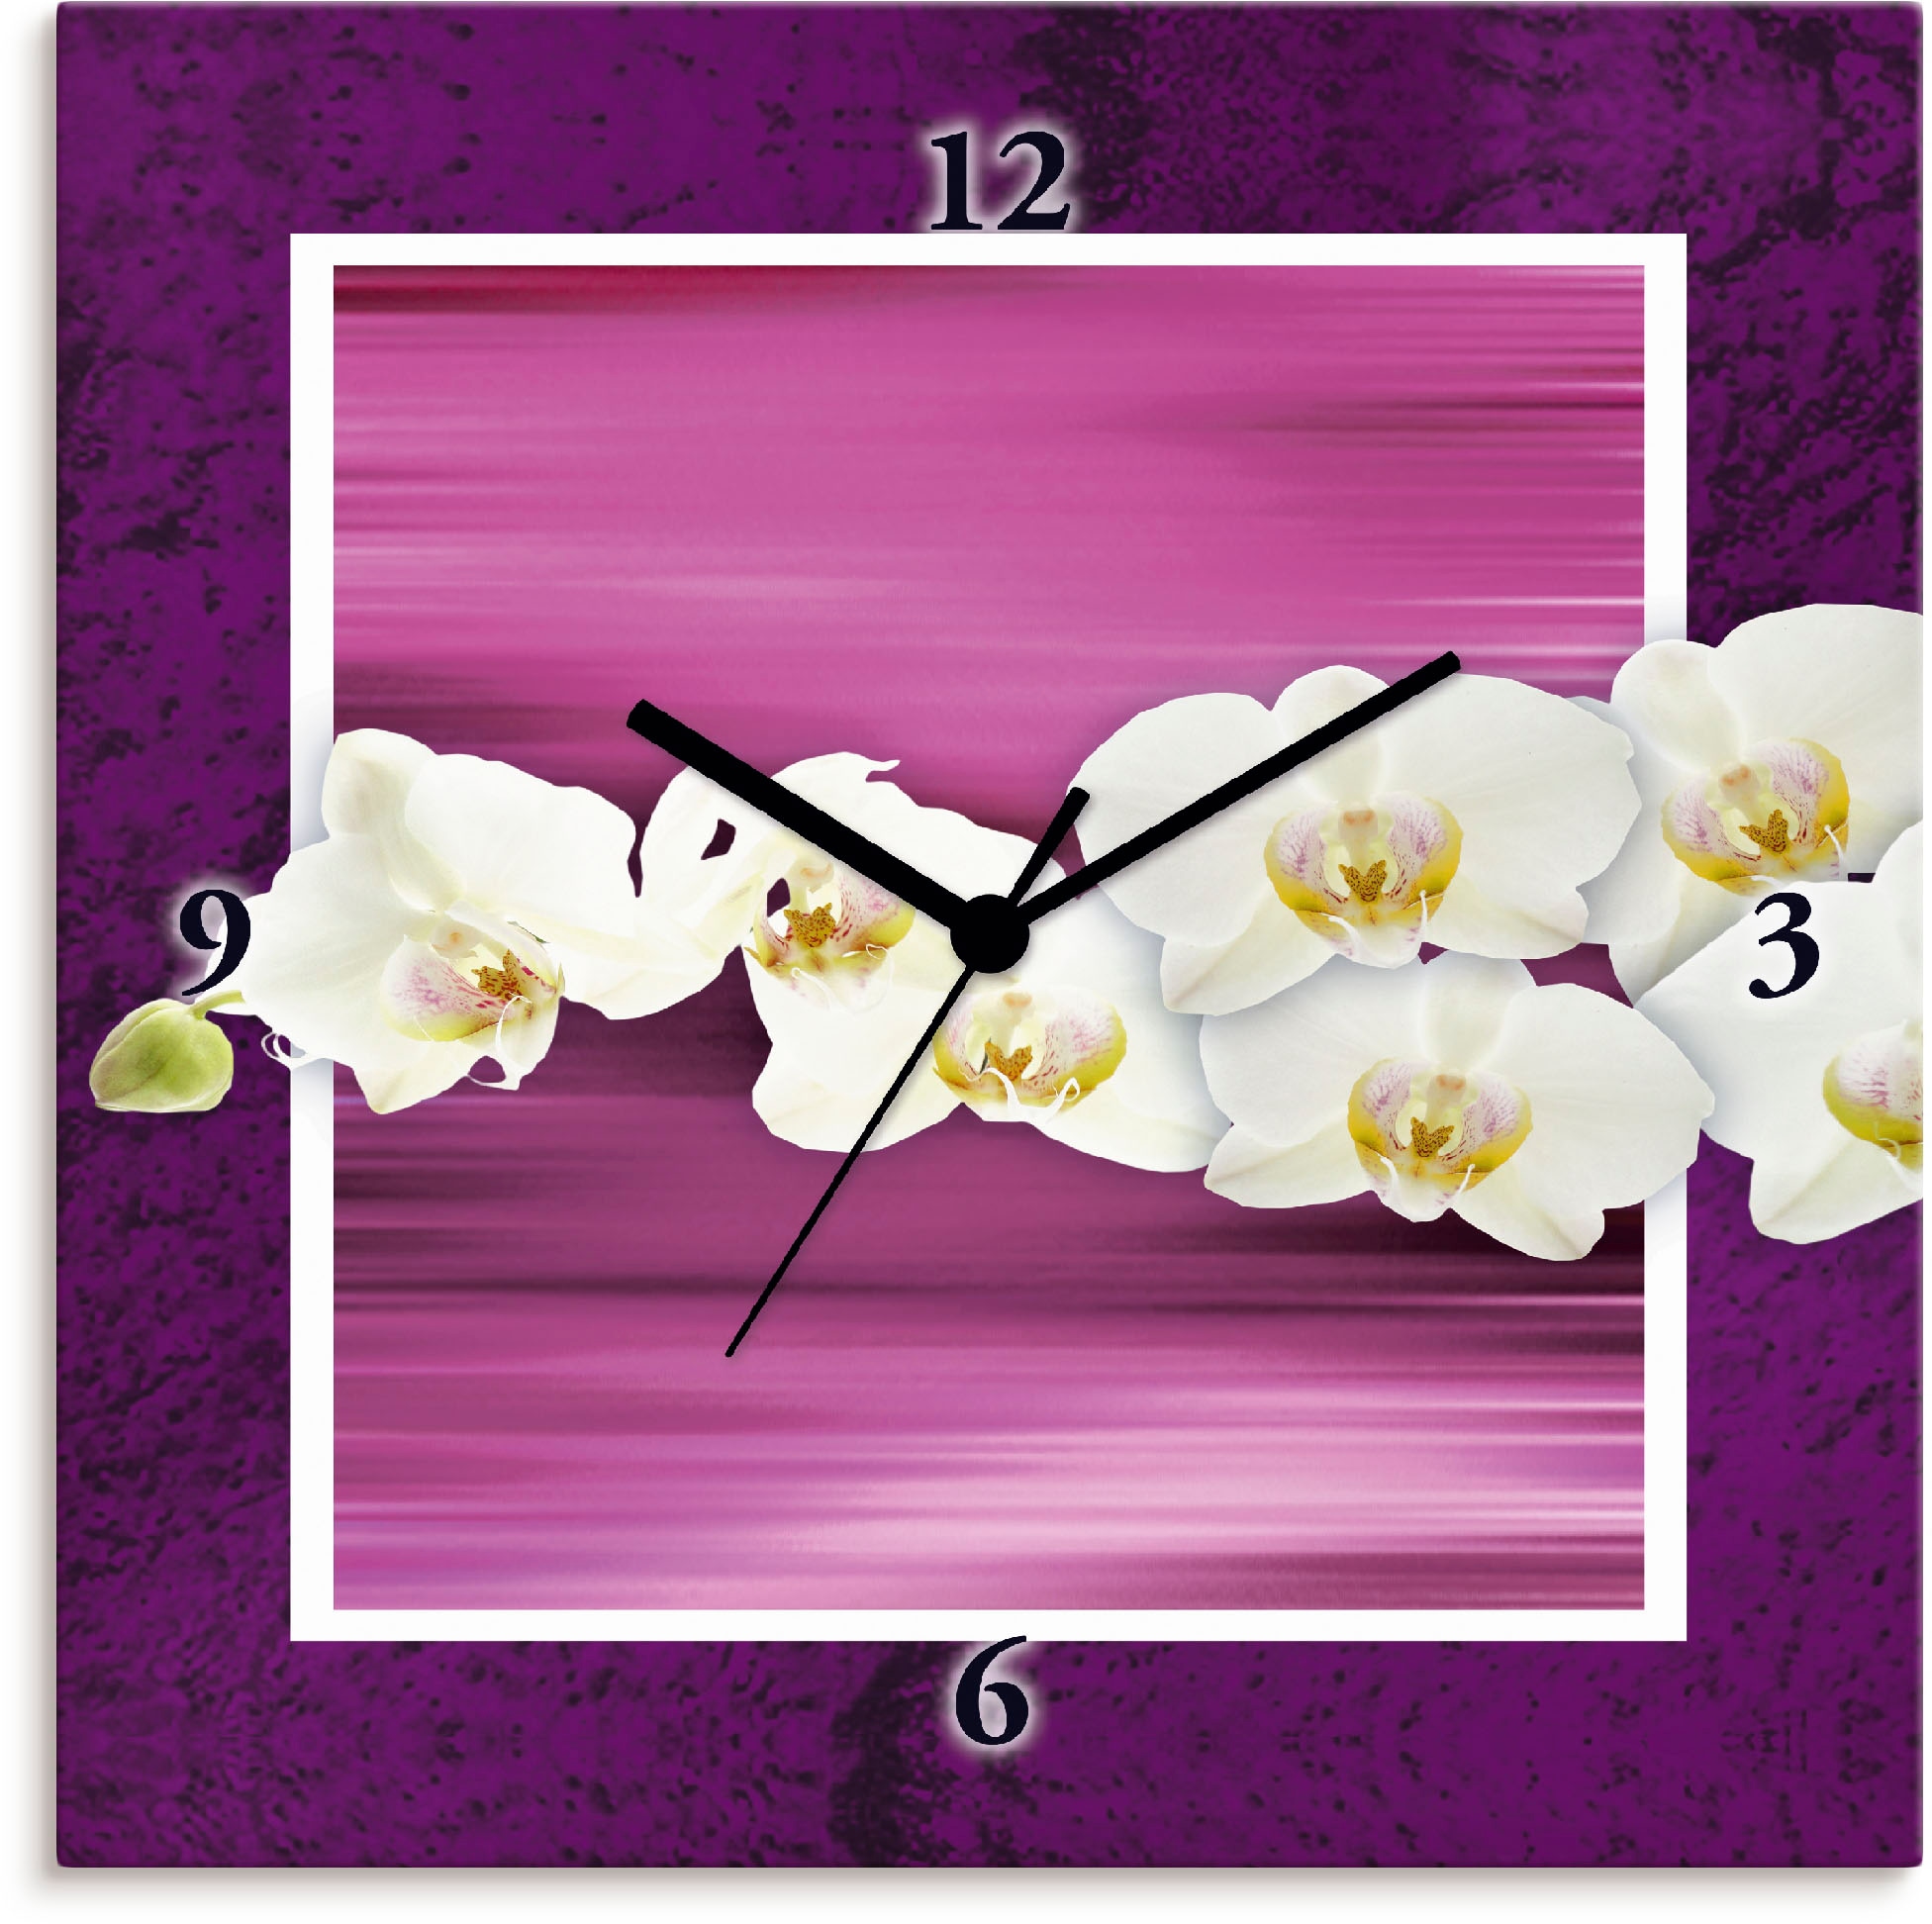 Artland Wanduhr »Orchideen - violett«, wahlweise mit Quarz- oder Funkuhrwerk, lautlos ohne Tickgeräusche